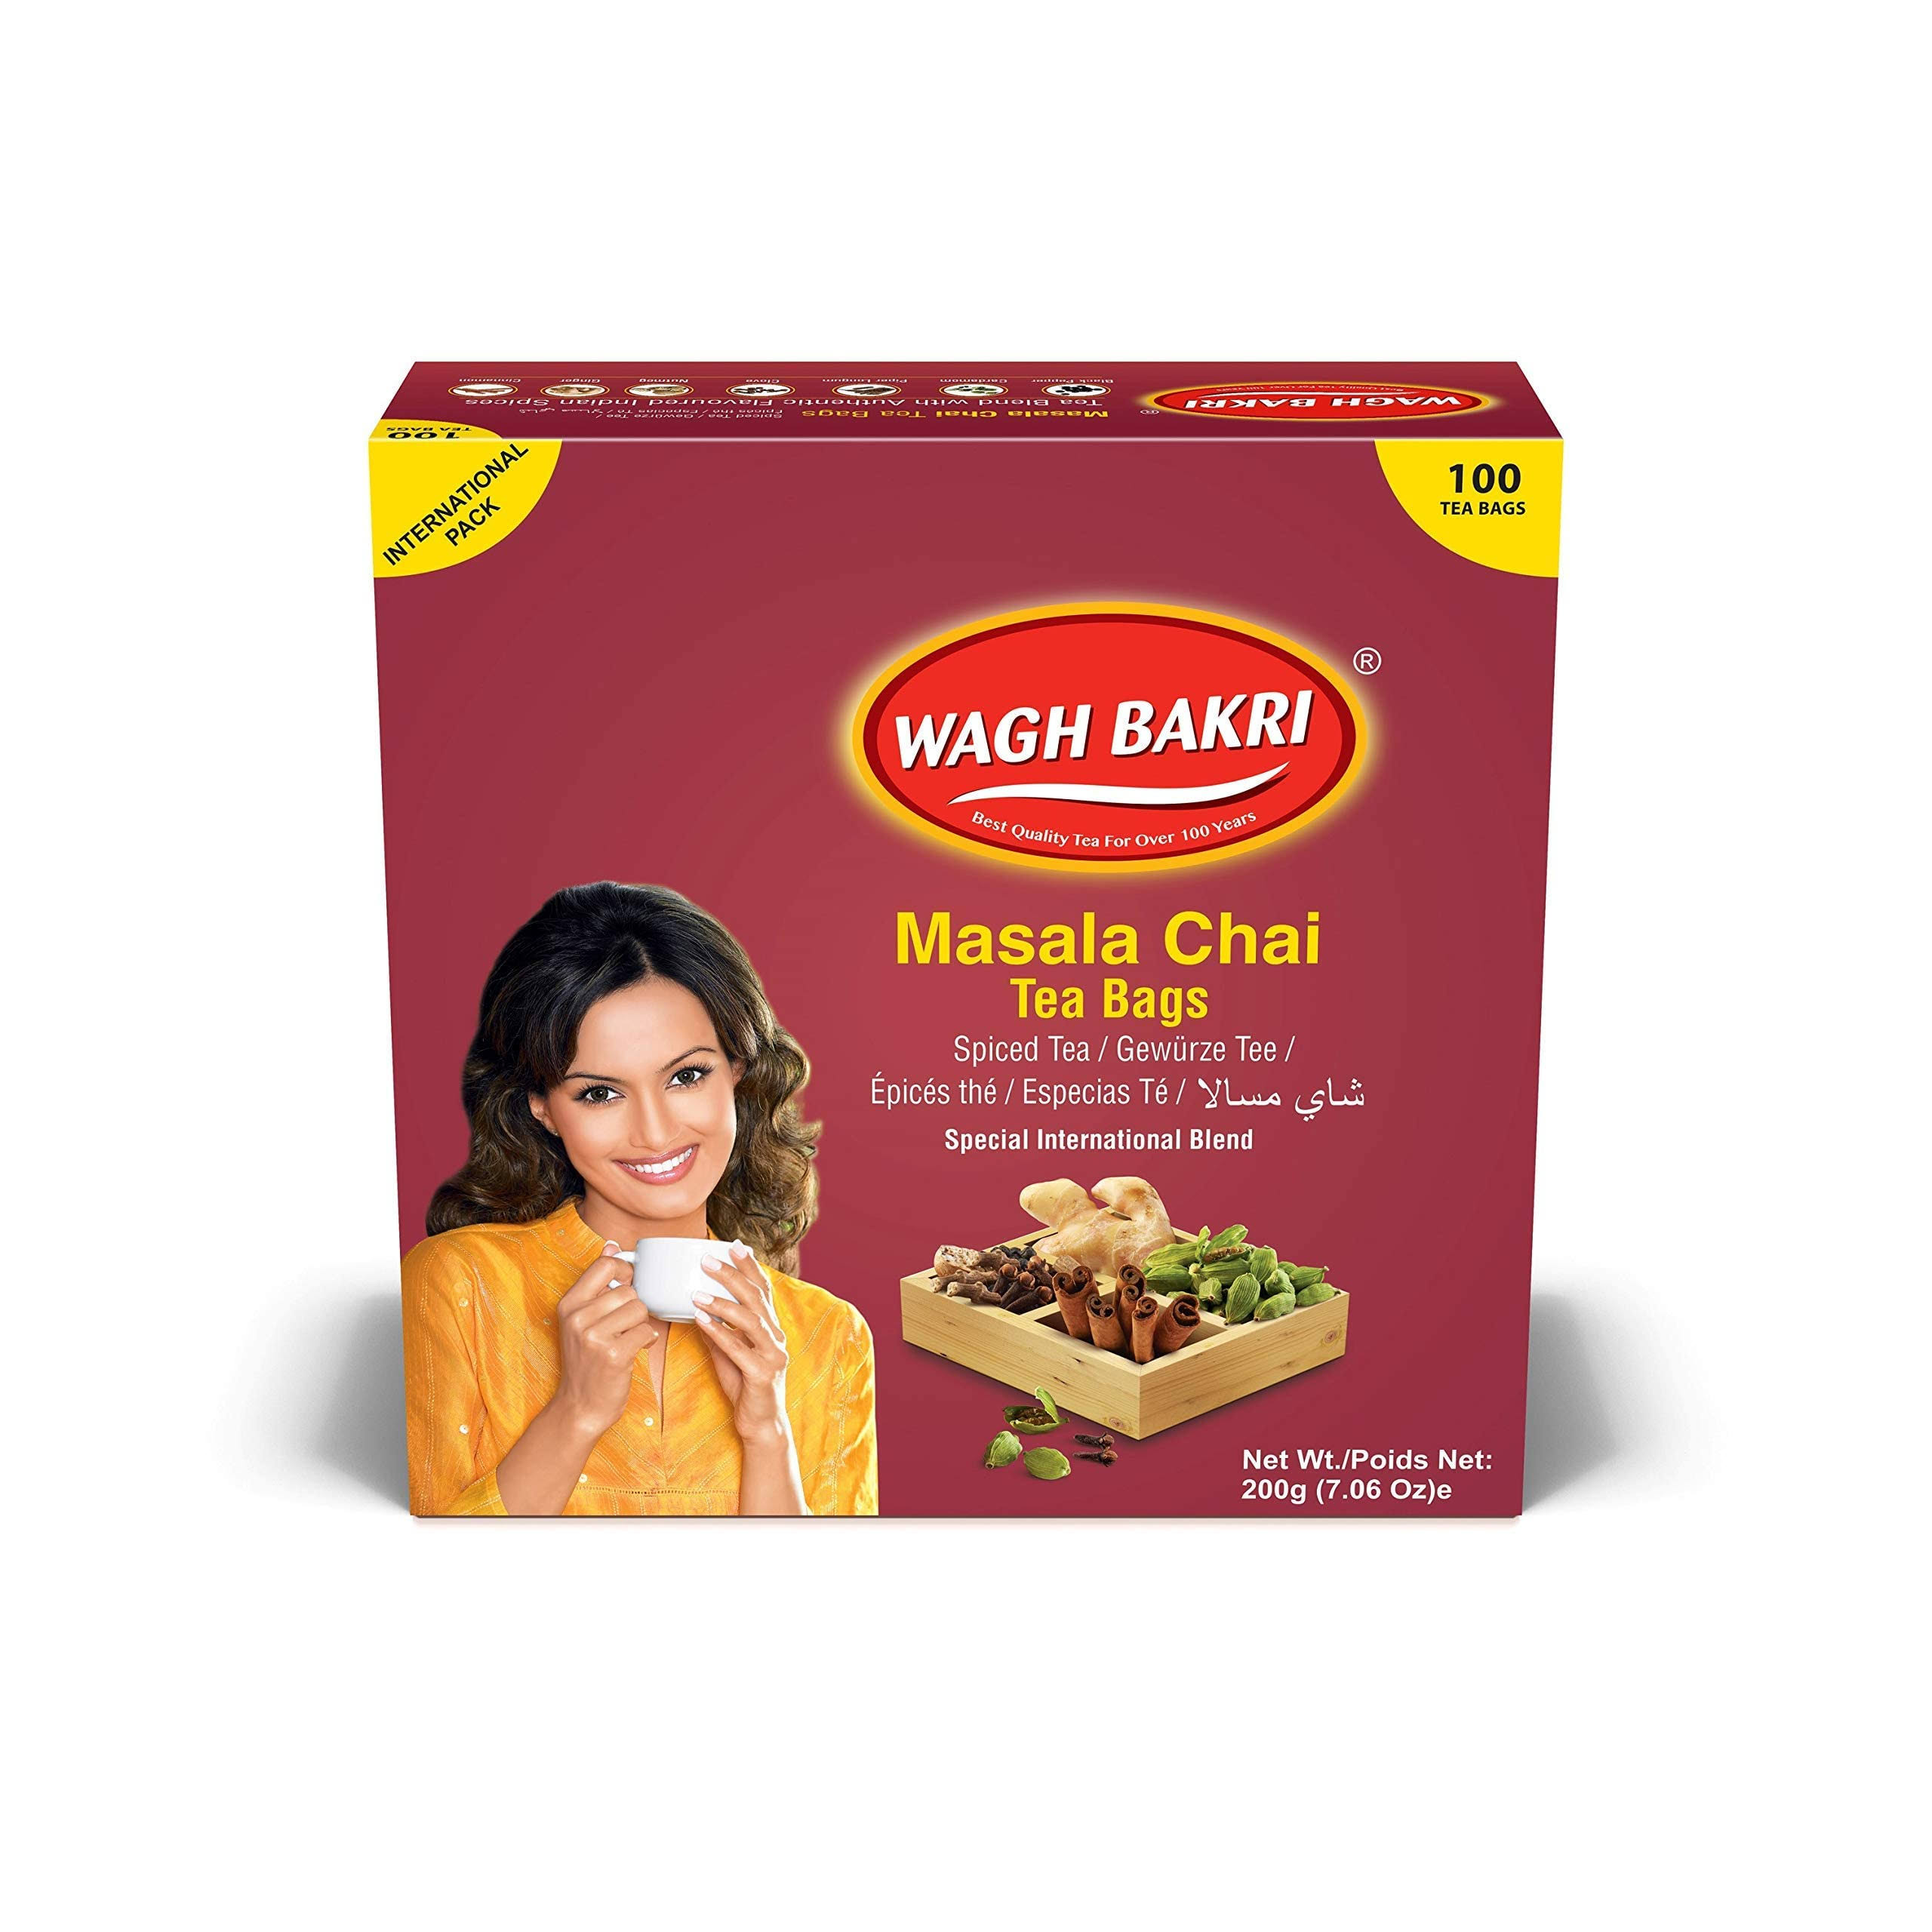 Wagh Bakri Masala Chai 100 Tea Bags